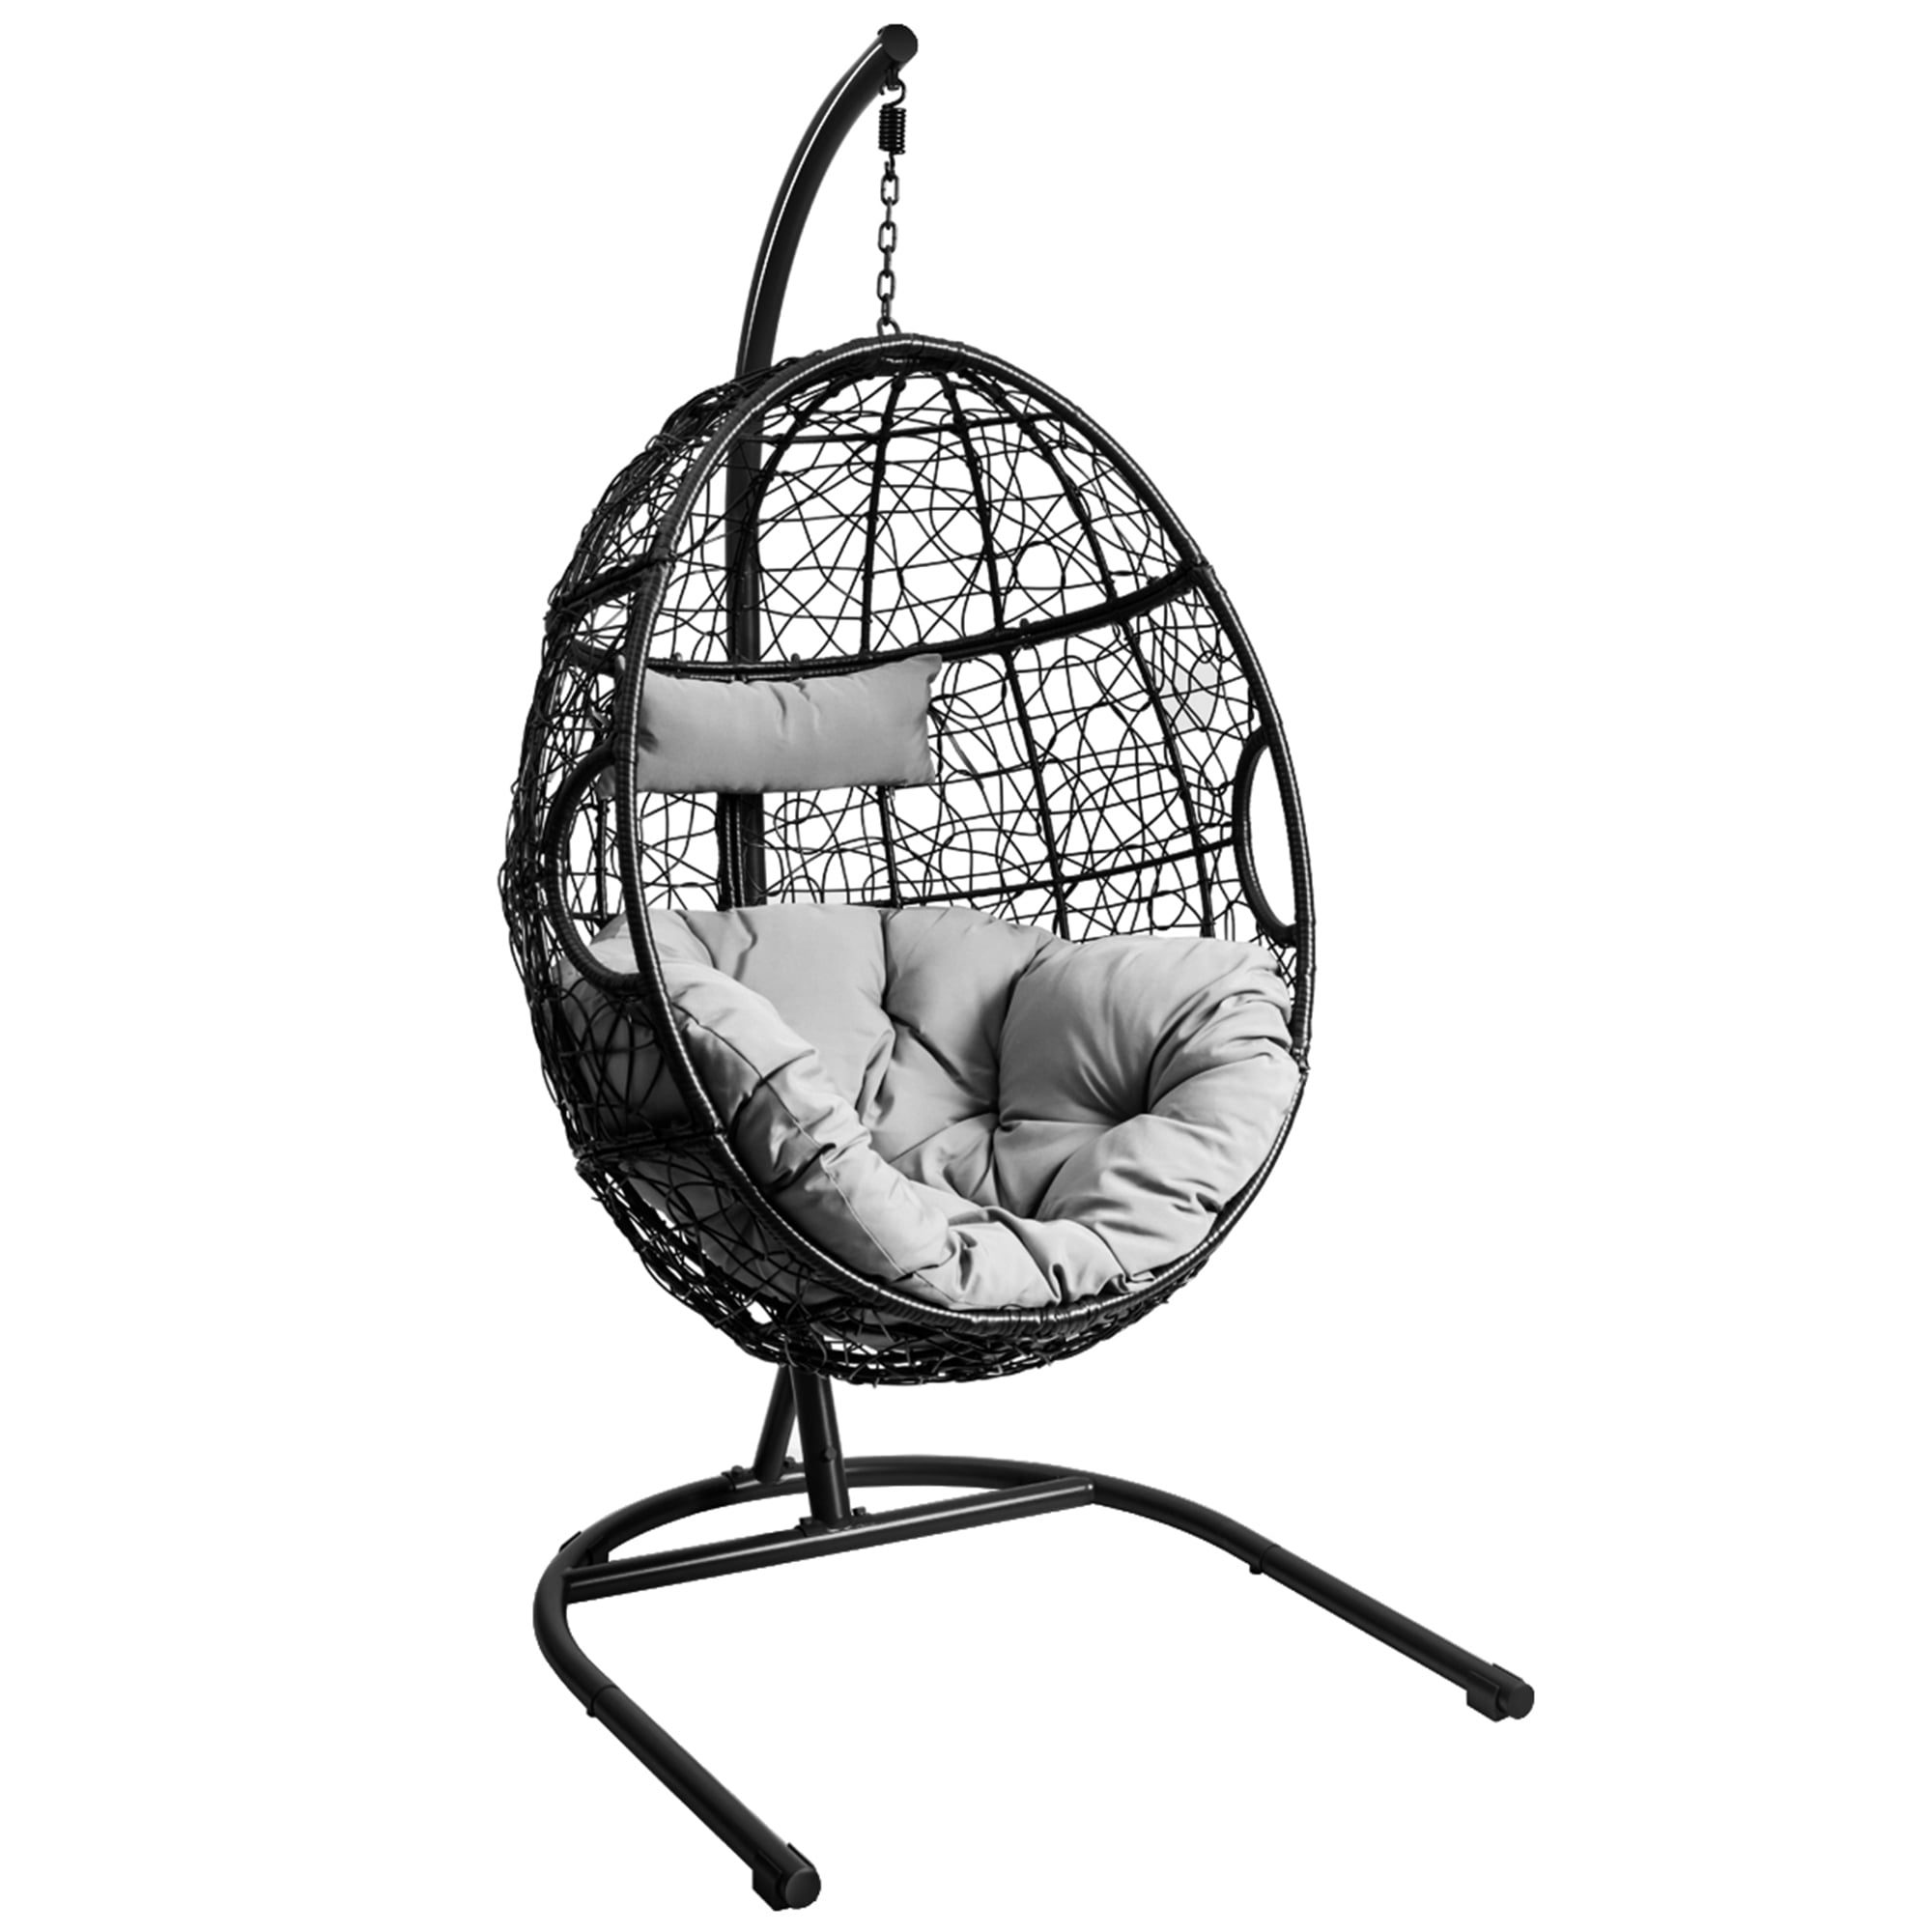 Gymax Hanging Hammock Chair Egg Swing Chair w/ Seat